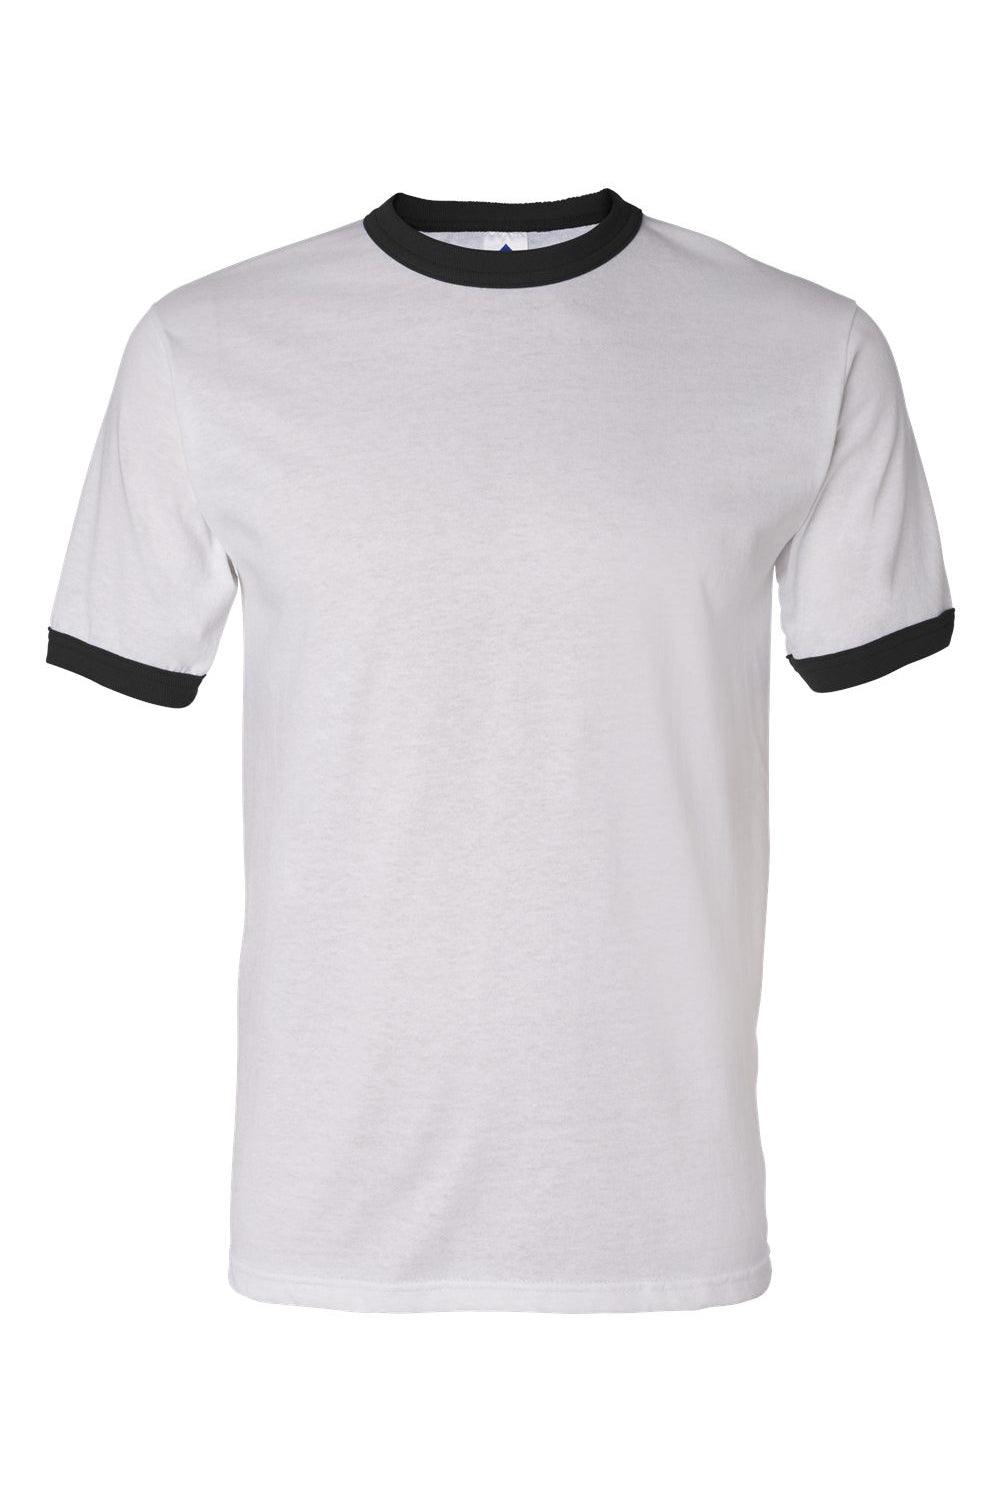 Augusta Sportswear 710 Mens Ringer Short Sleeve Crewneck T-Shirt White/Black Flat Front